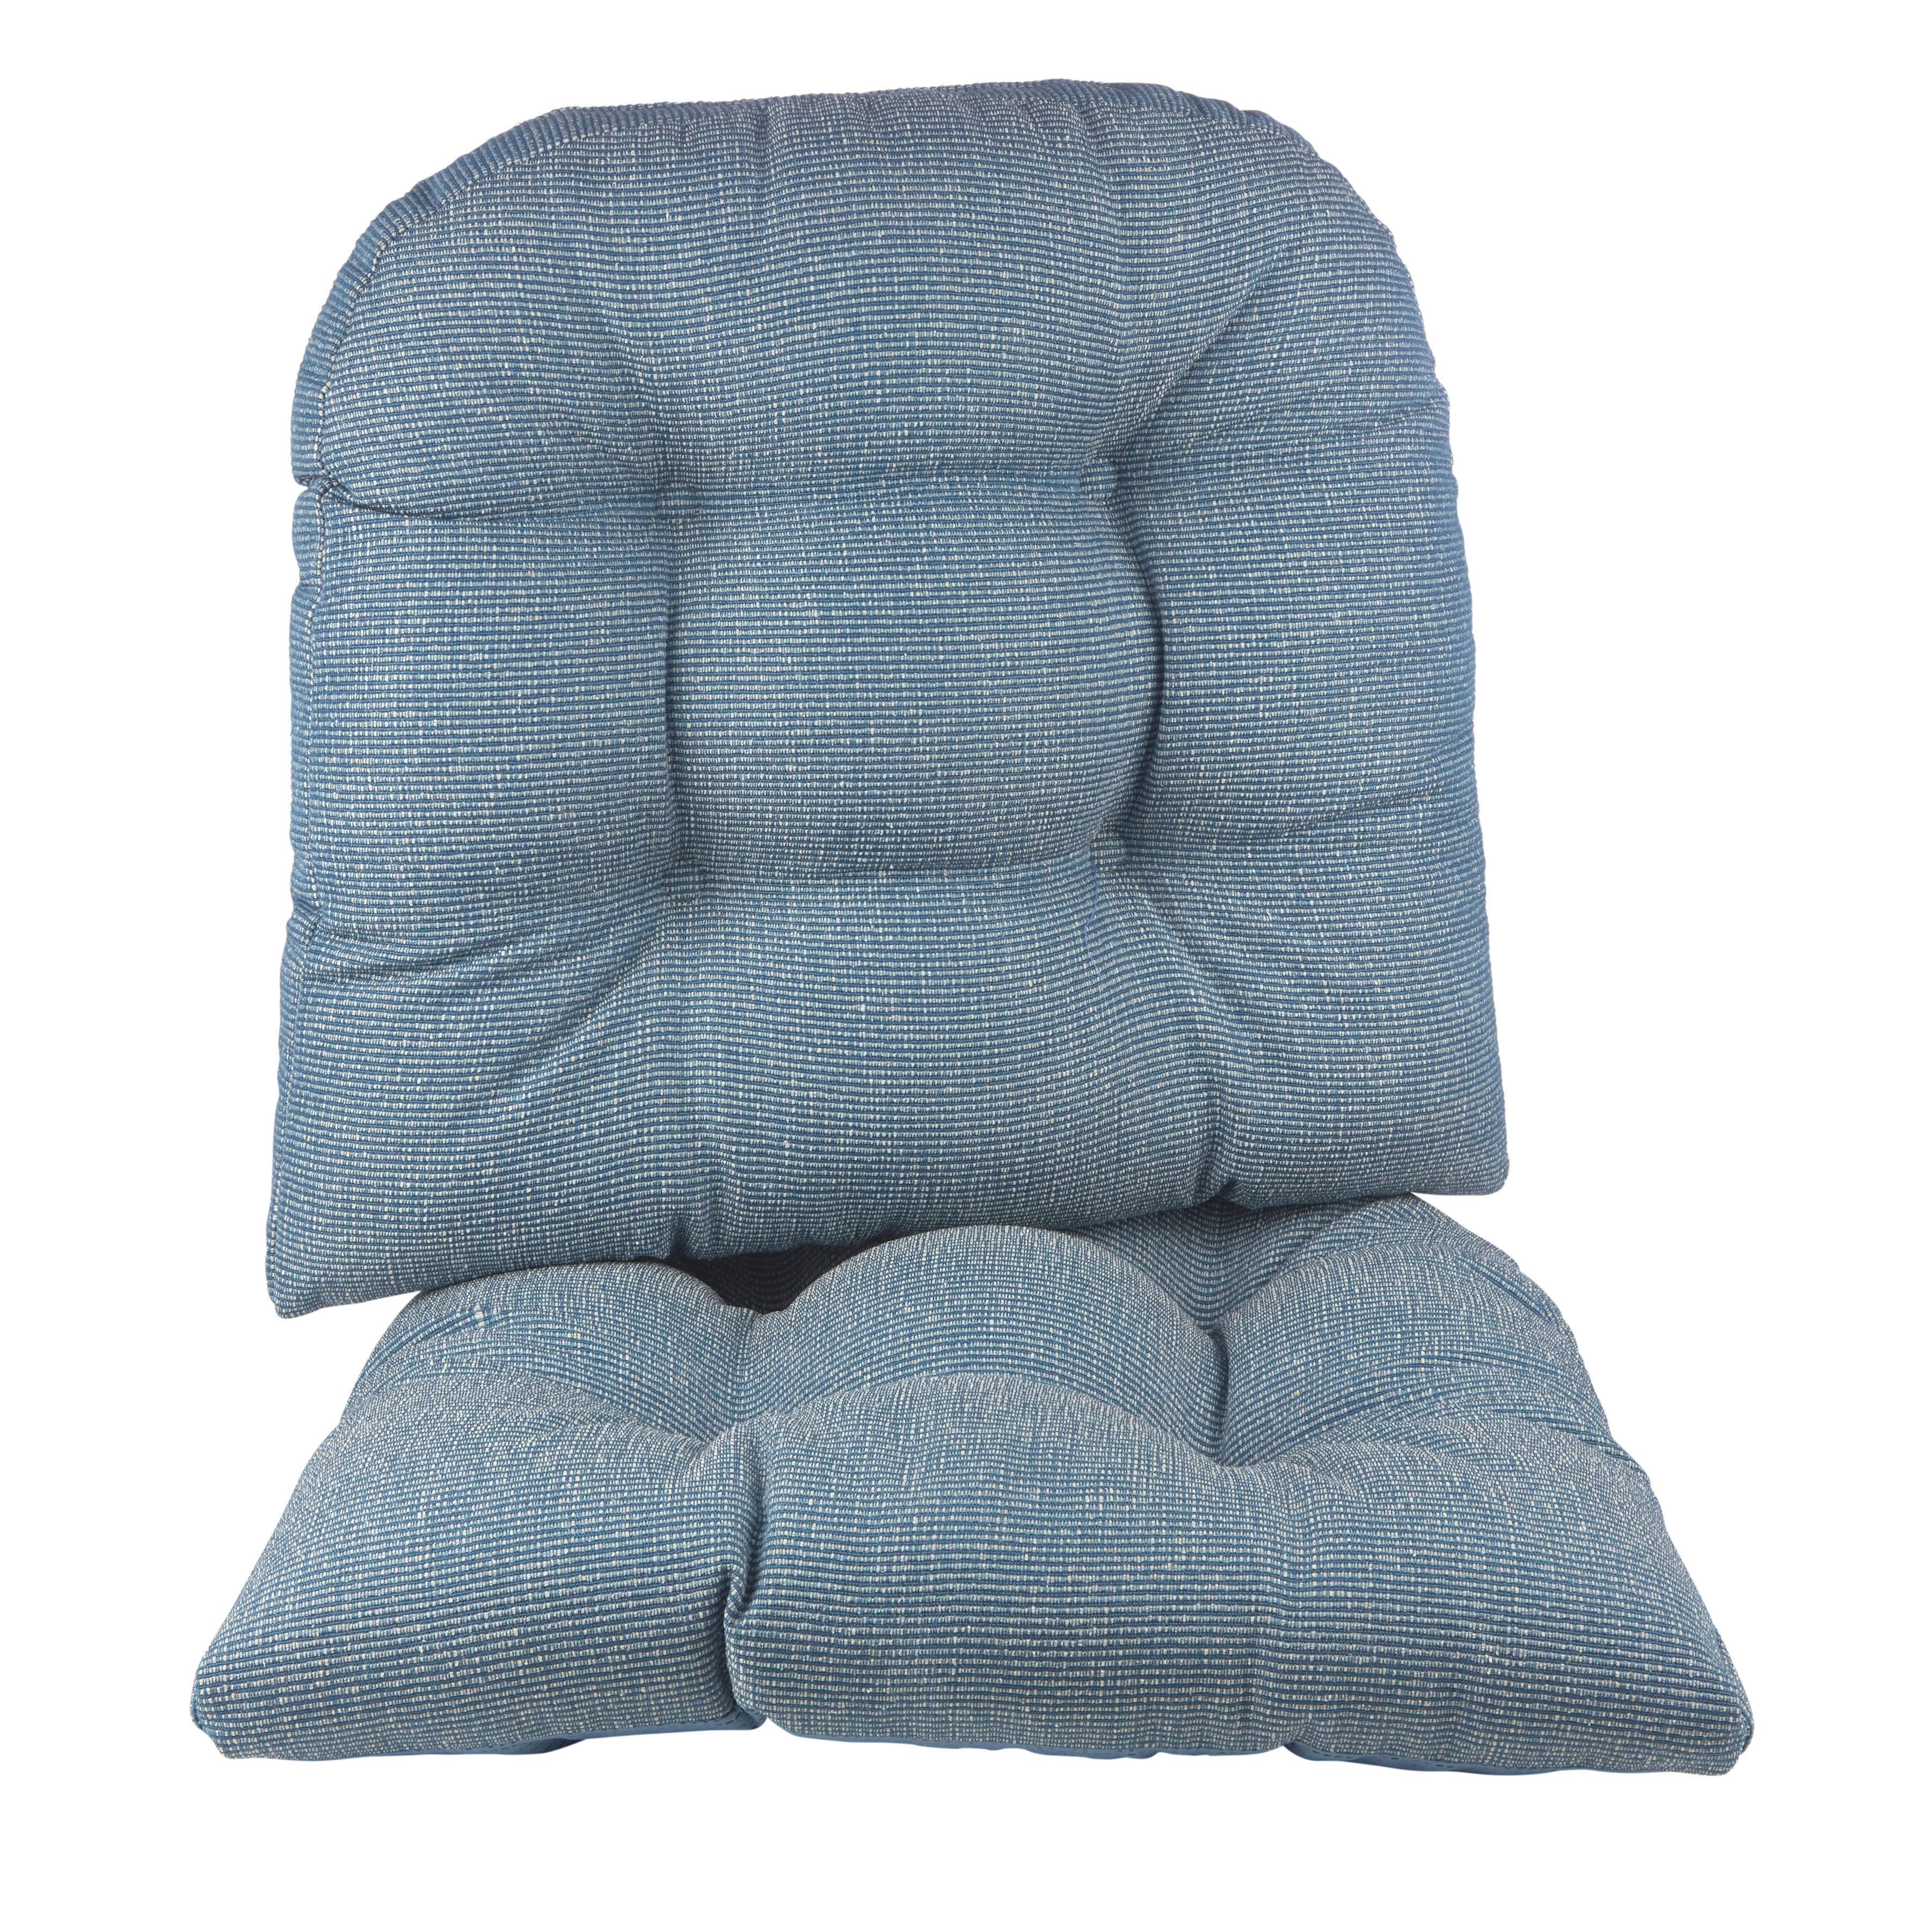 Gripper 15 x 16 Non-Slip Twill Tufted Chair Cushions Set of 4 - Wedge Blue